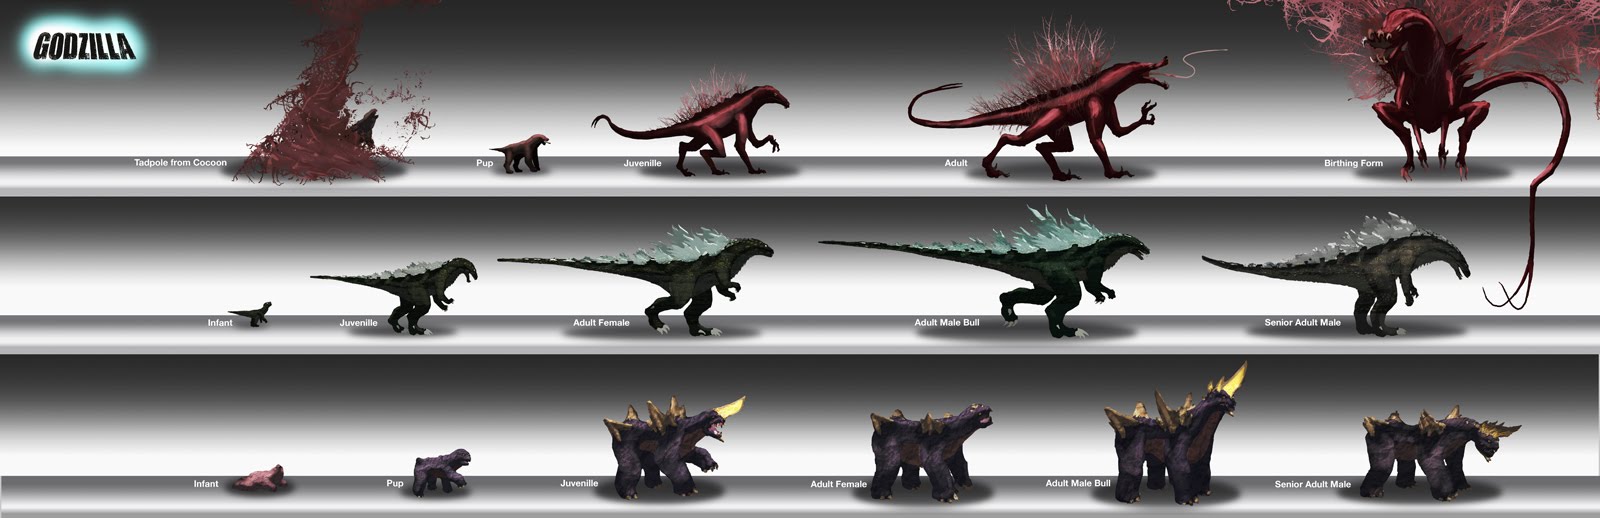 Potential Godzilla 2014 Concept Artwork - Monster Evolution